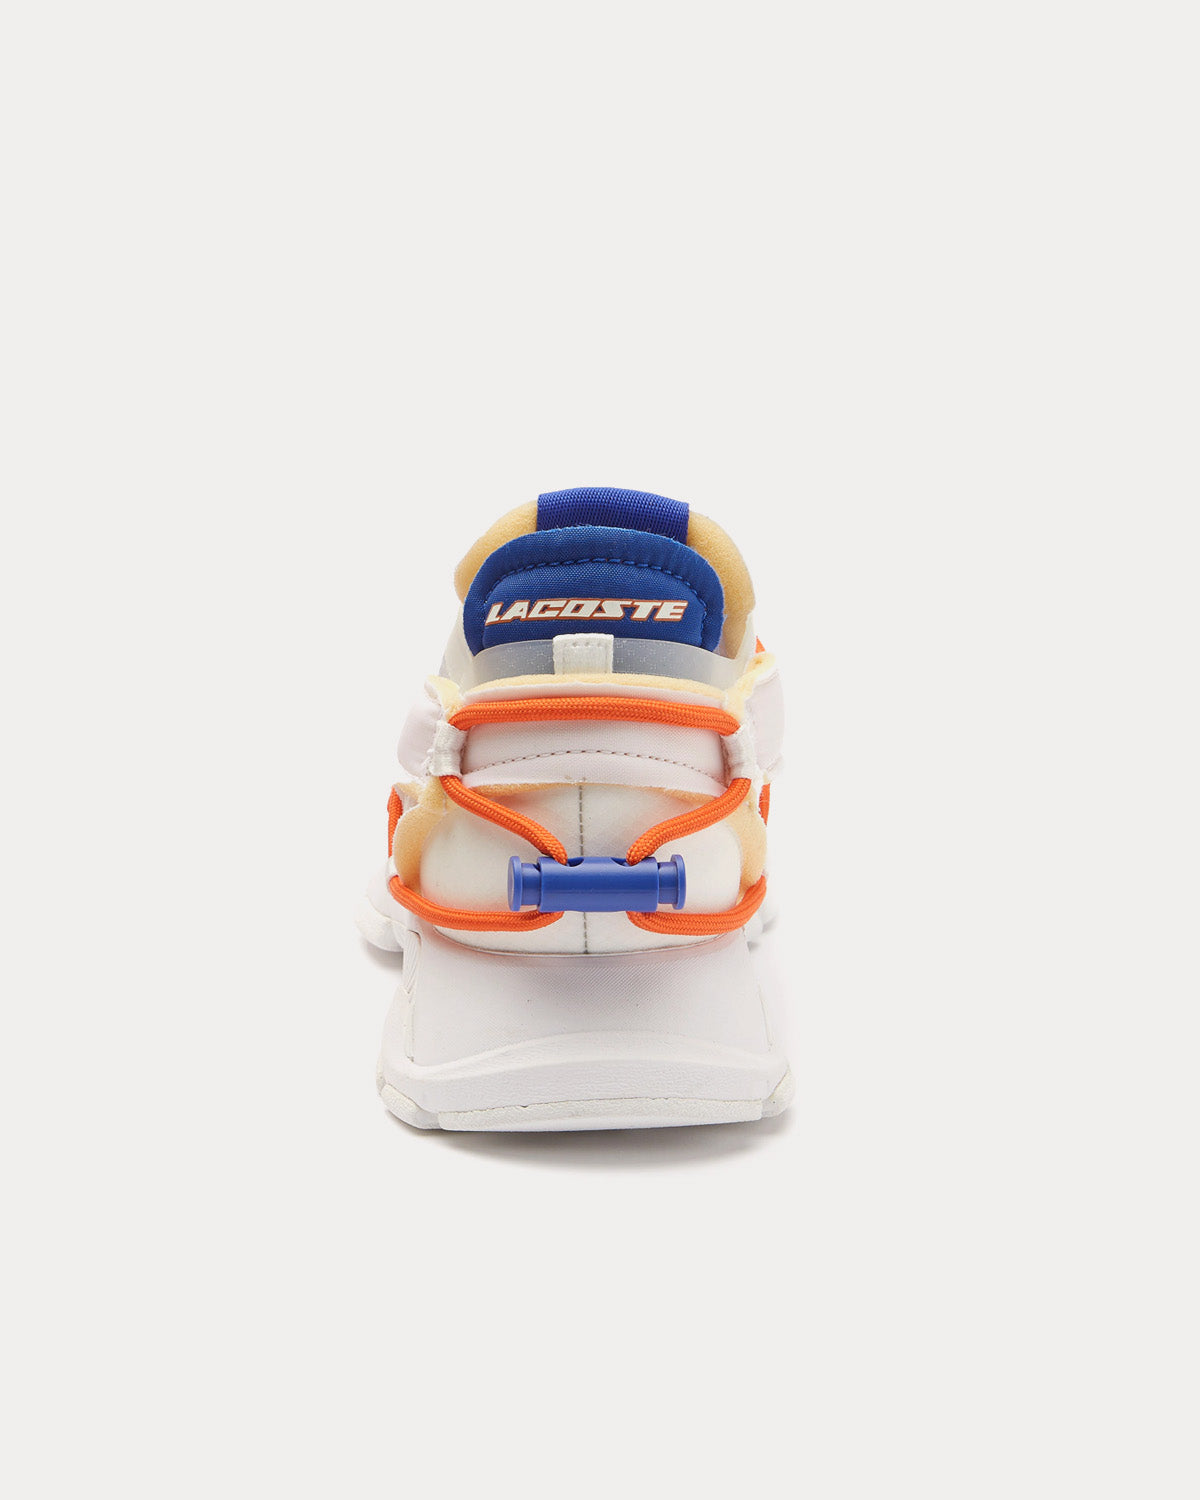 Lacoste - L003 RWY White / Blue Low Top Sneakers